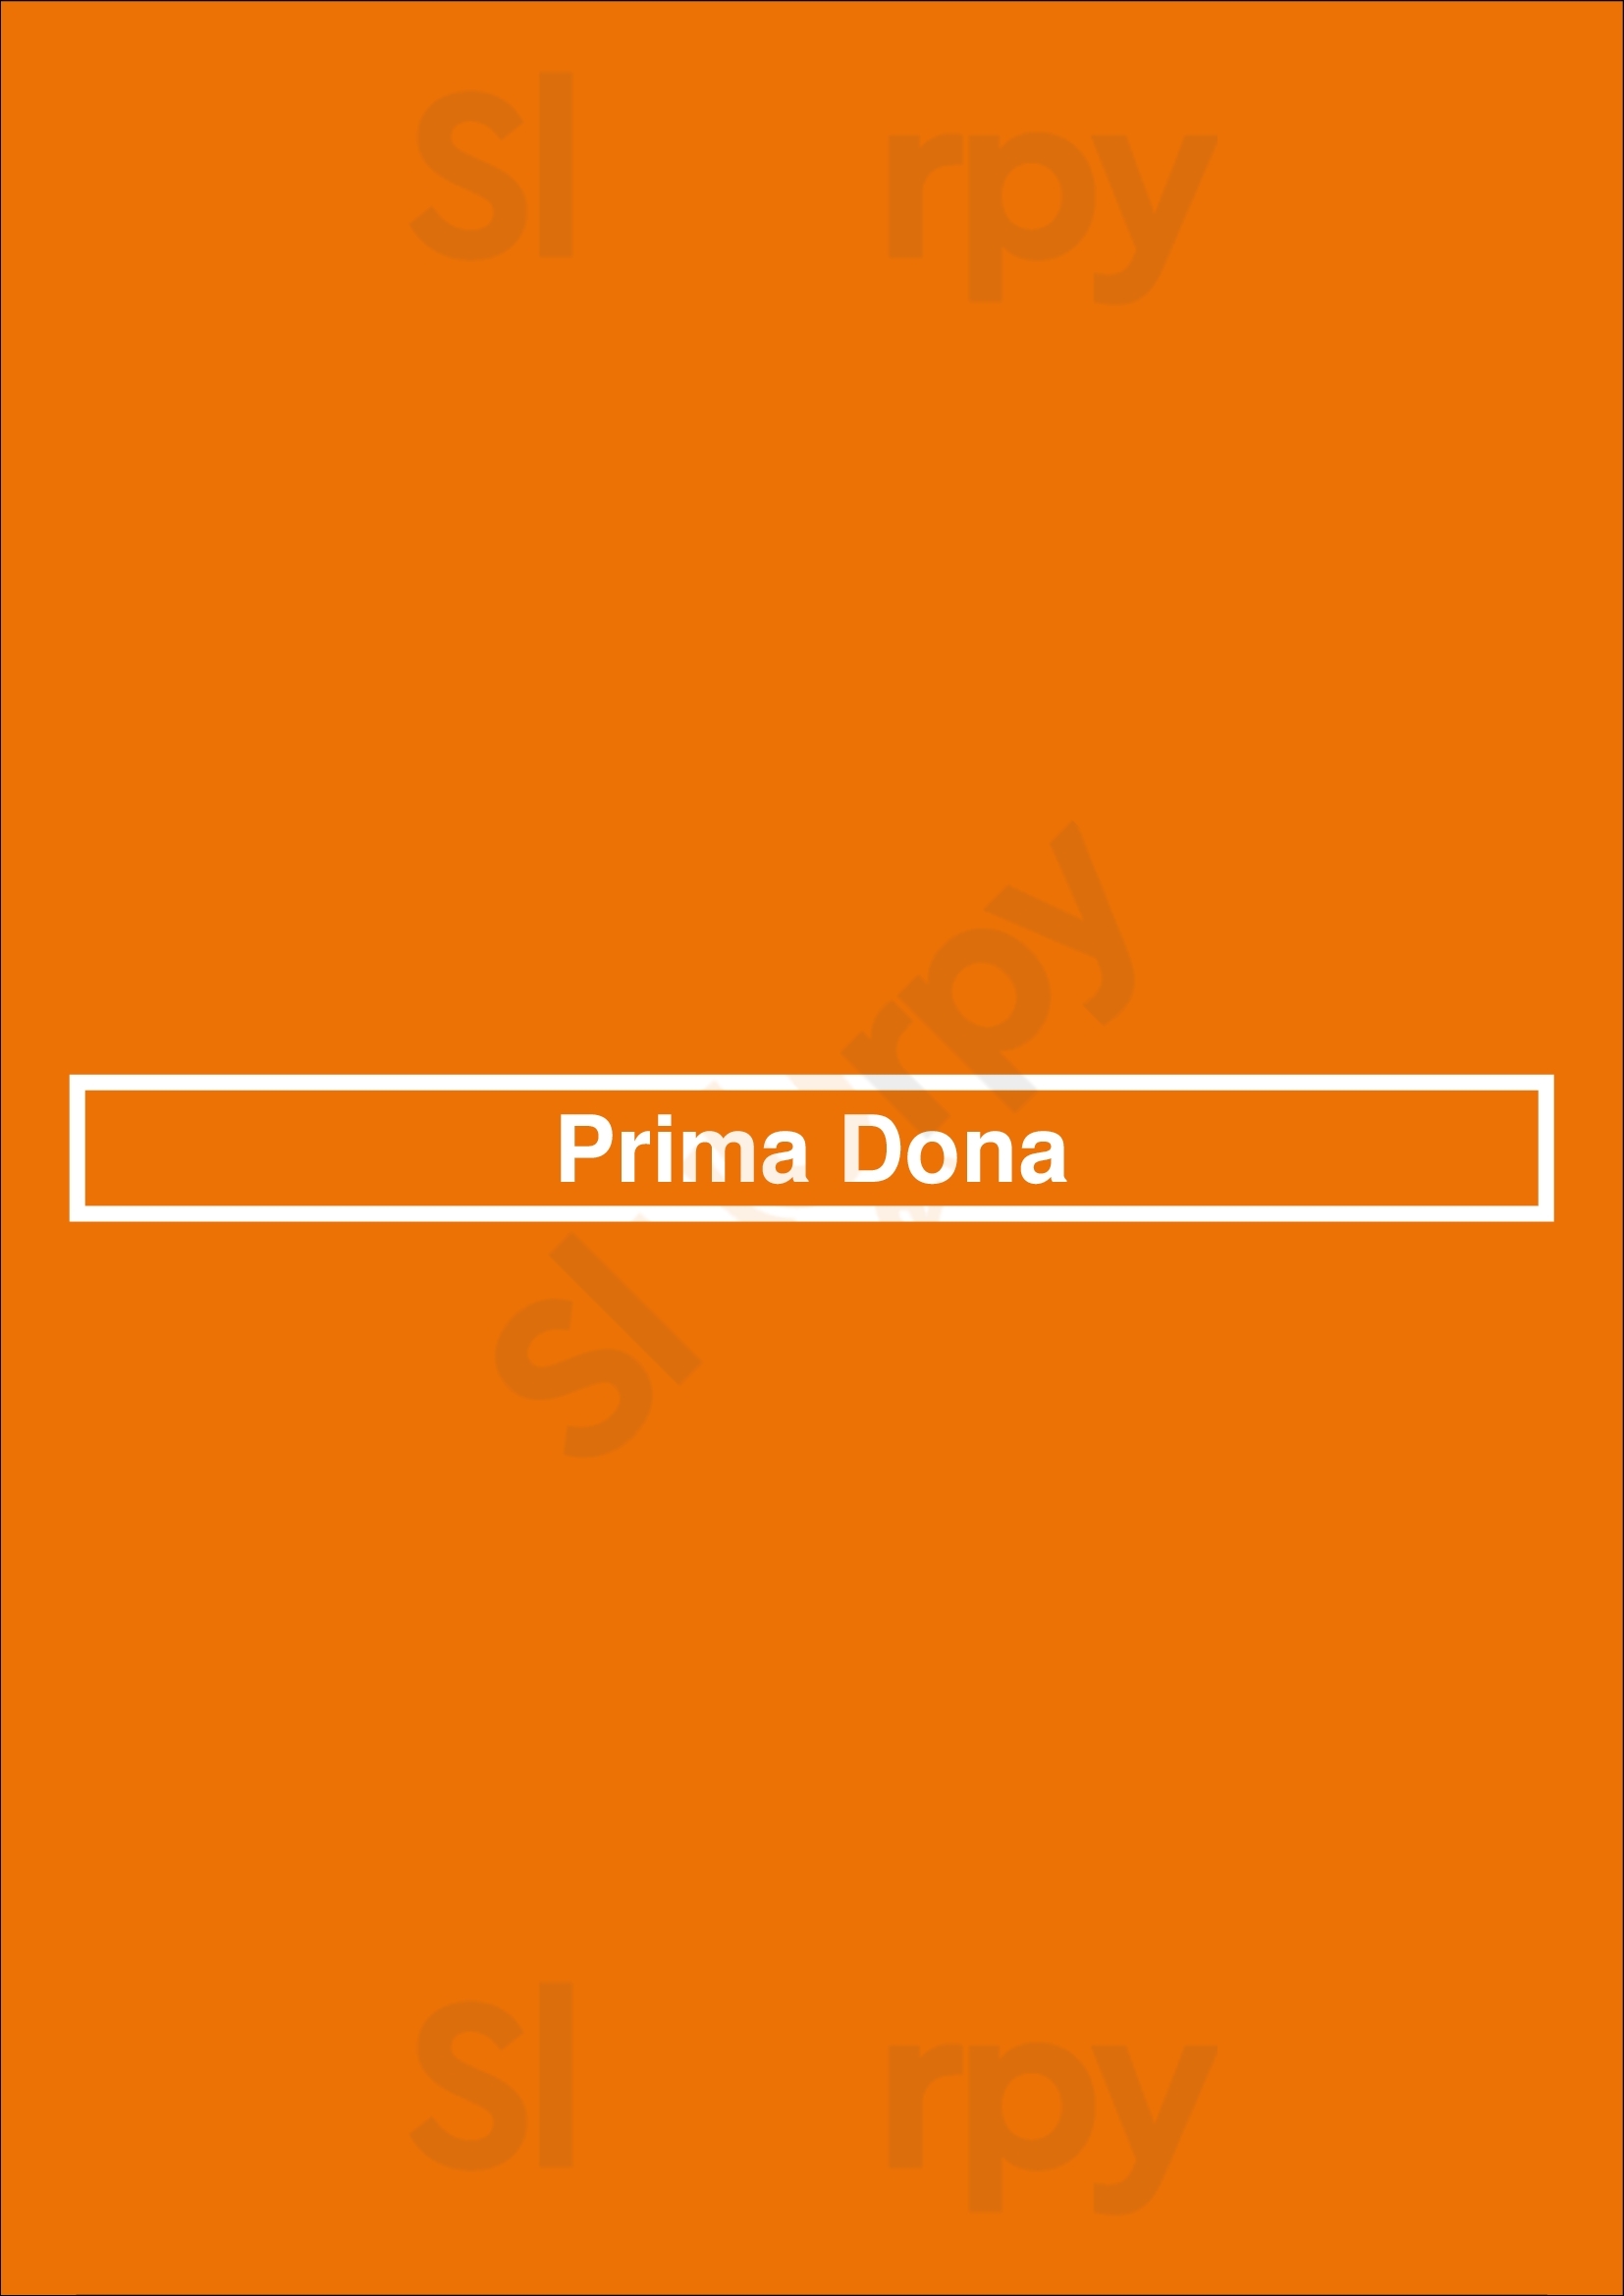 Prima Dona Porto Menu - 1